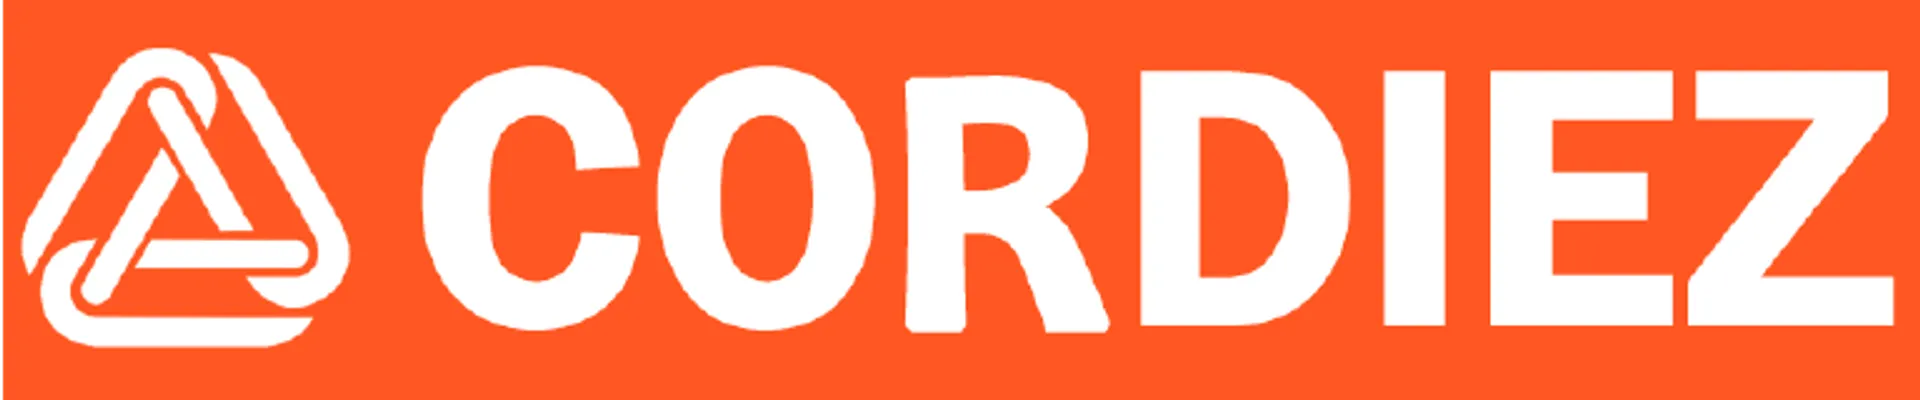 CORDIEZ logo